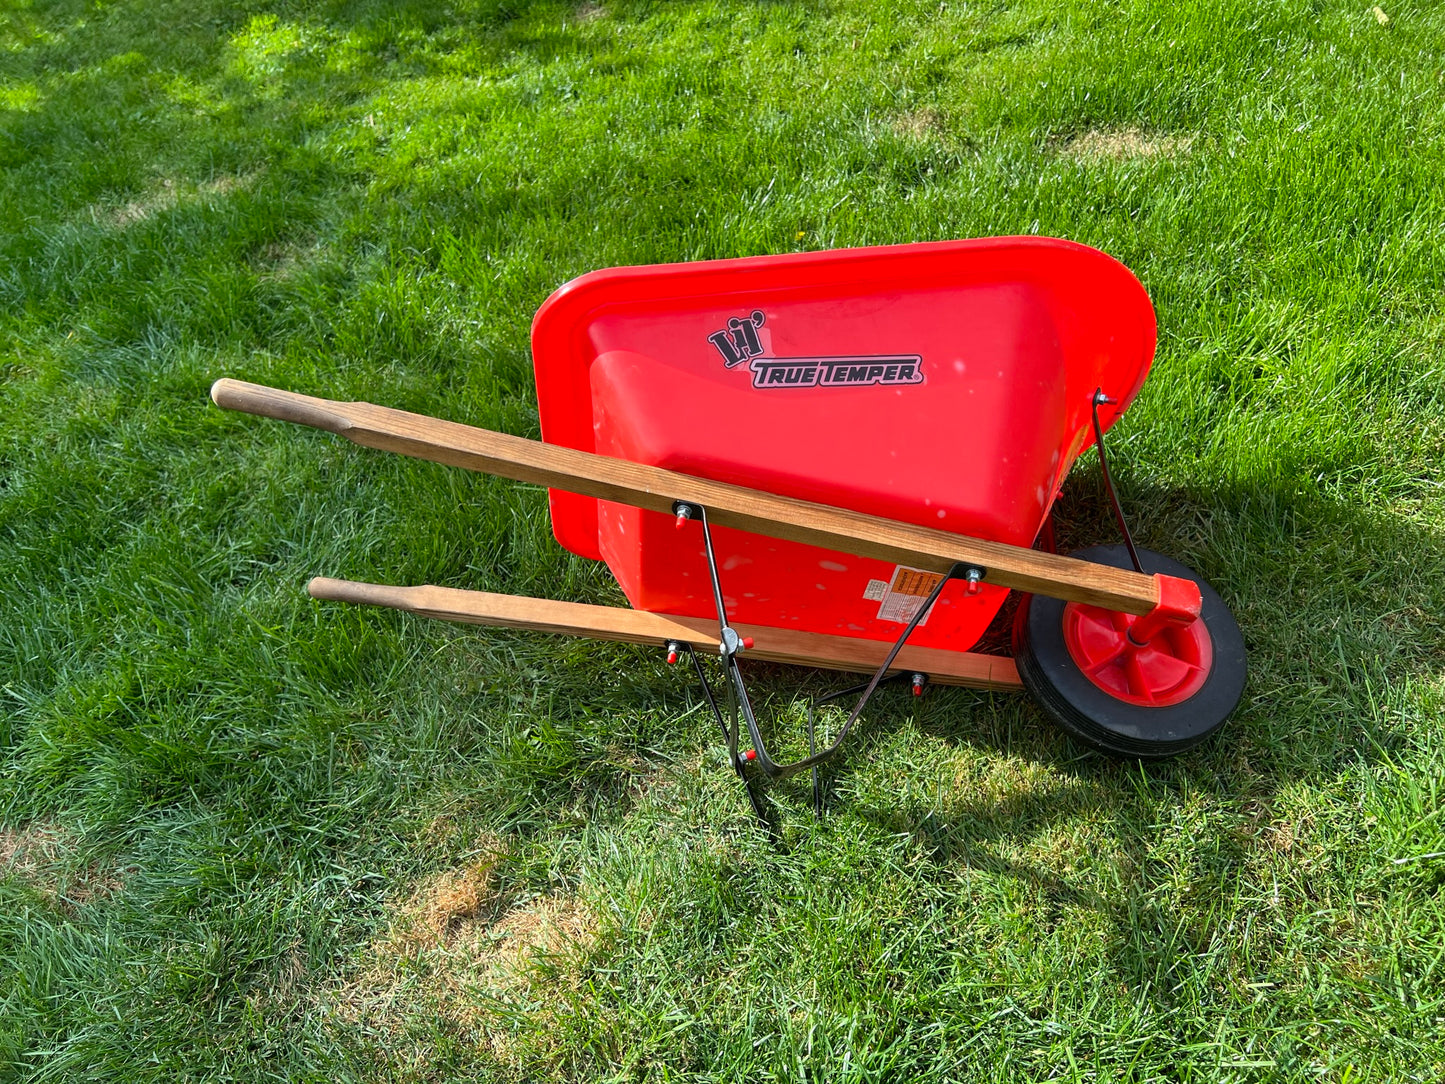 My Little Helper Child Size True Temper Garden Wheelbarrow Rubber Bucket Tires Wood Handle Age 3-8